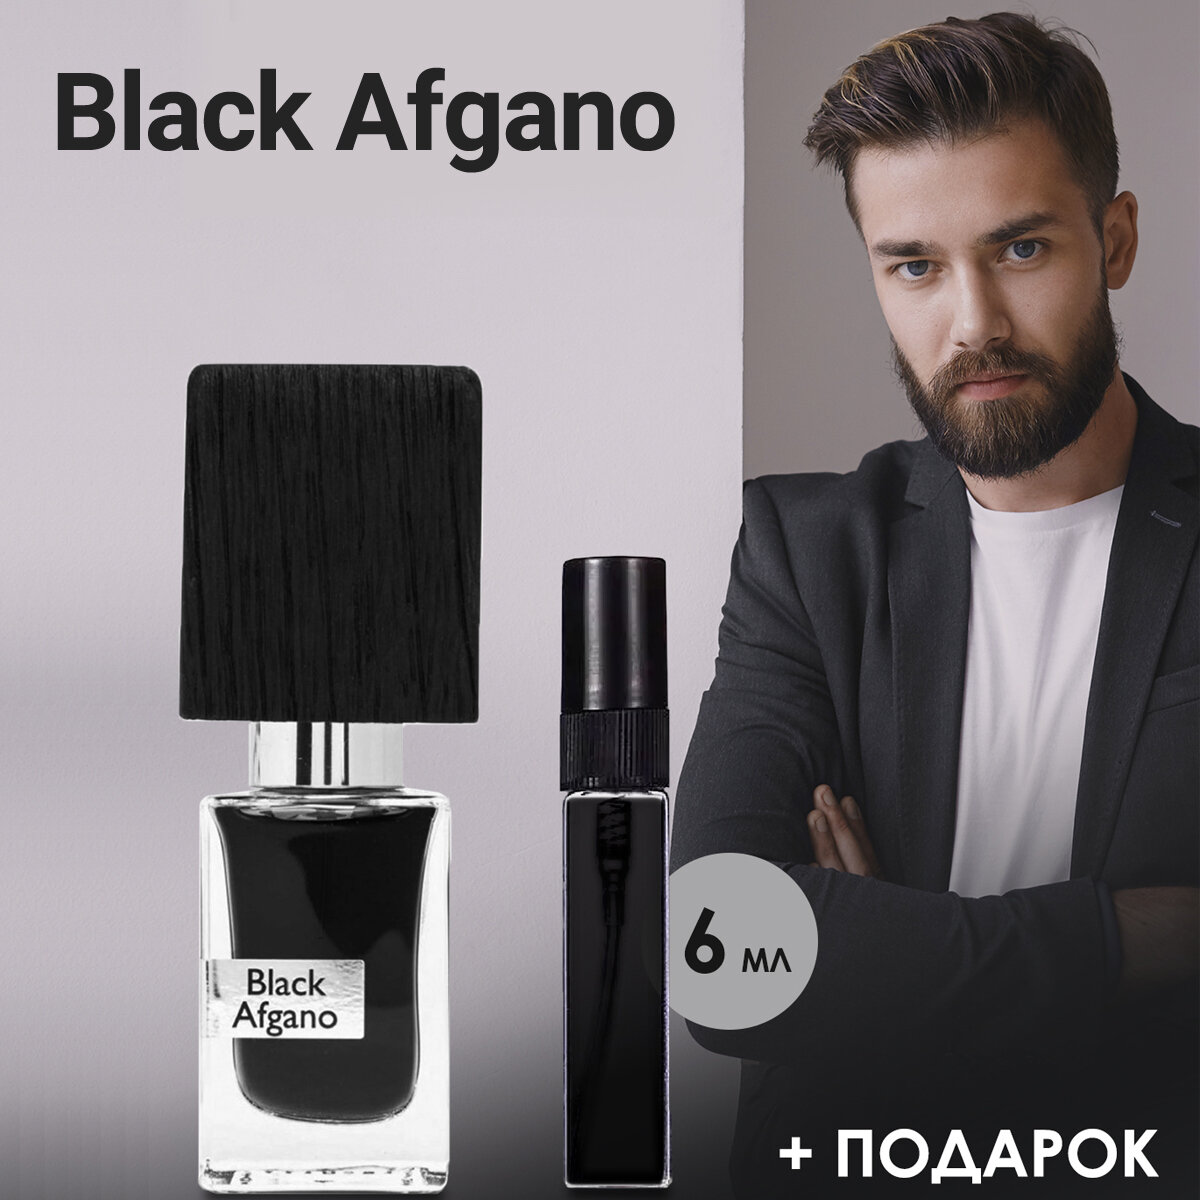 "Black Afgano" - Духи унисекс 6 мл + подарок 1 мл другого аромата